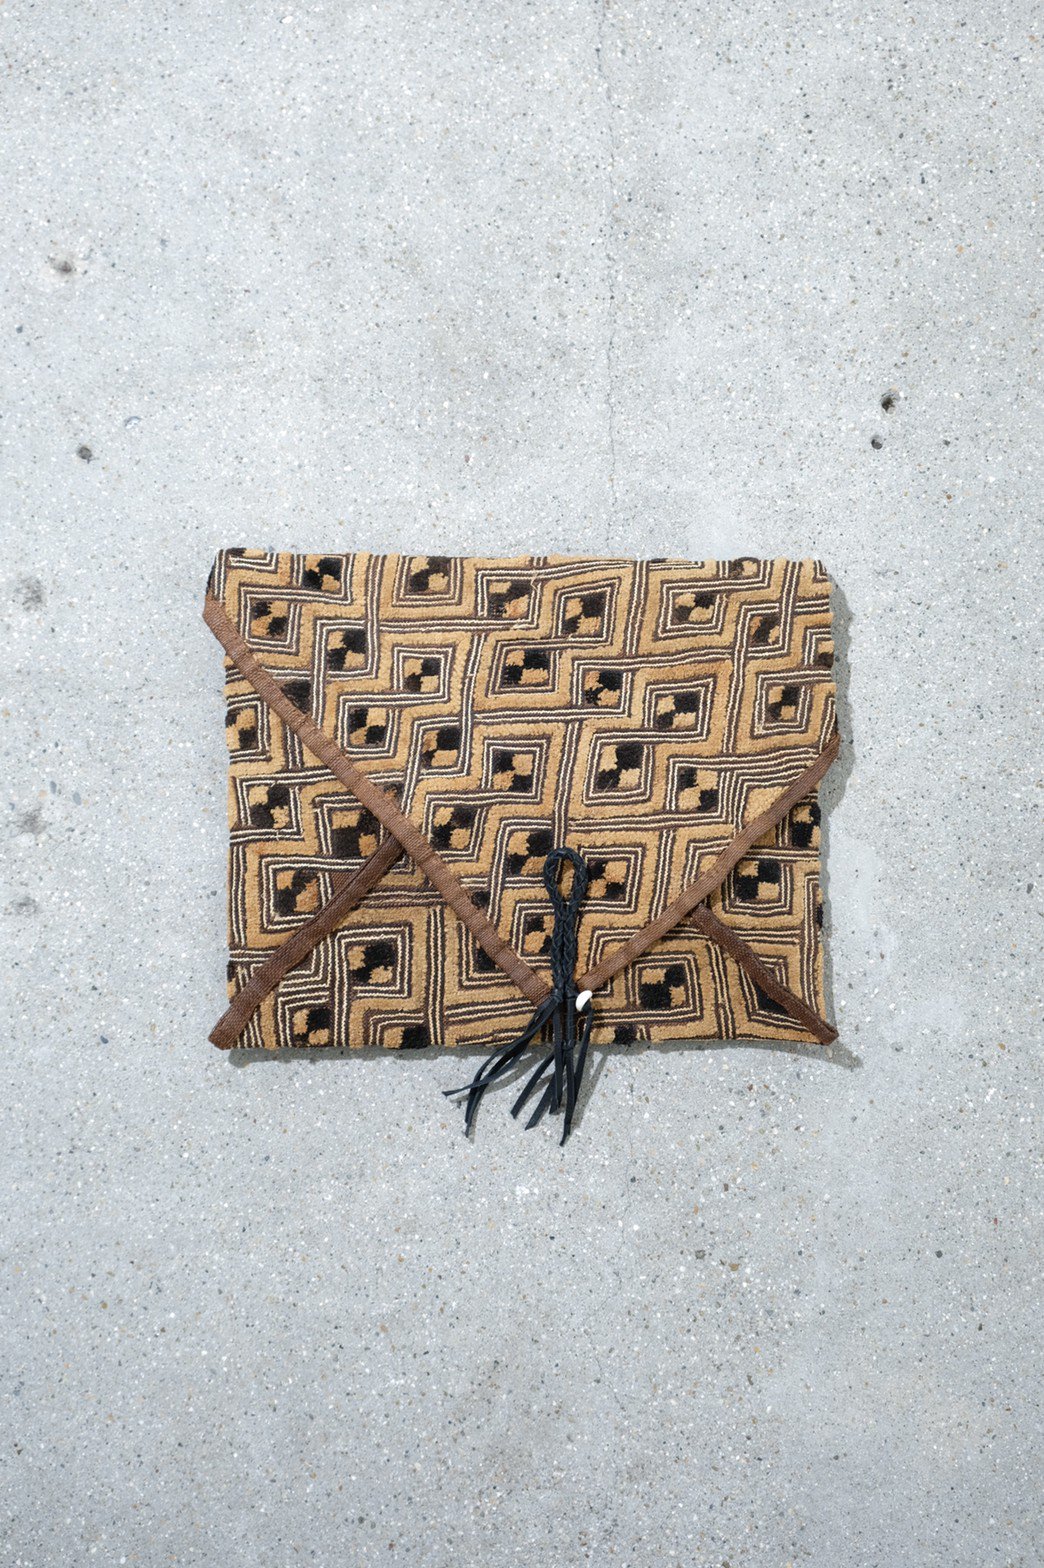 COUNTER POINT / KUBA BAG Fabric from Congo